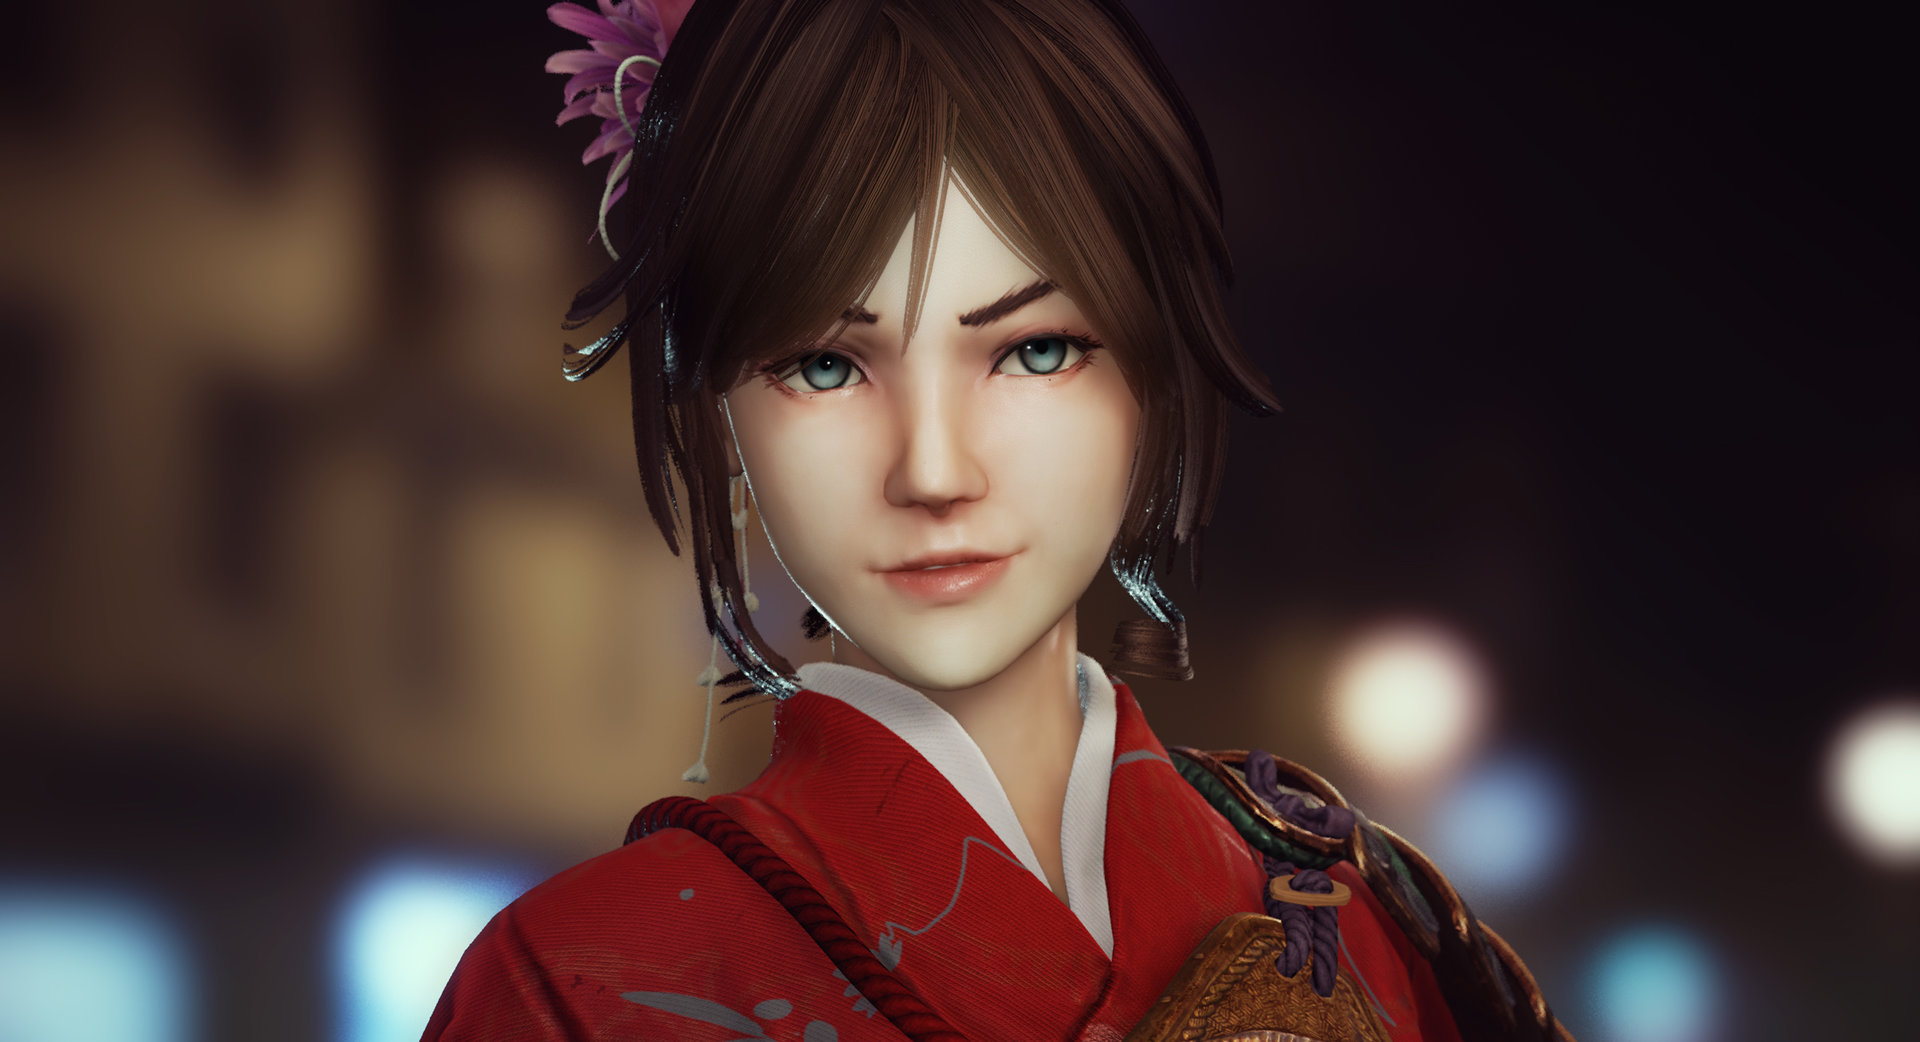 ArtStation - Samurai Girl, Saimon Ma